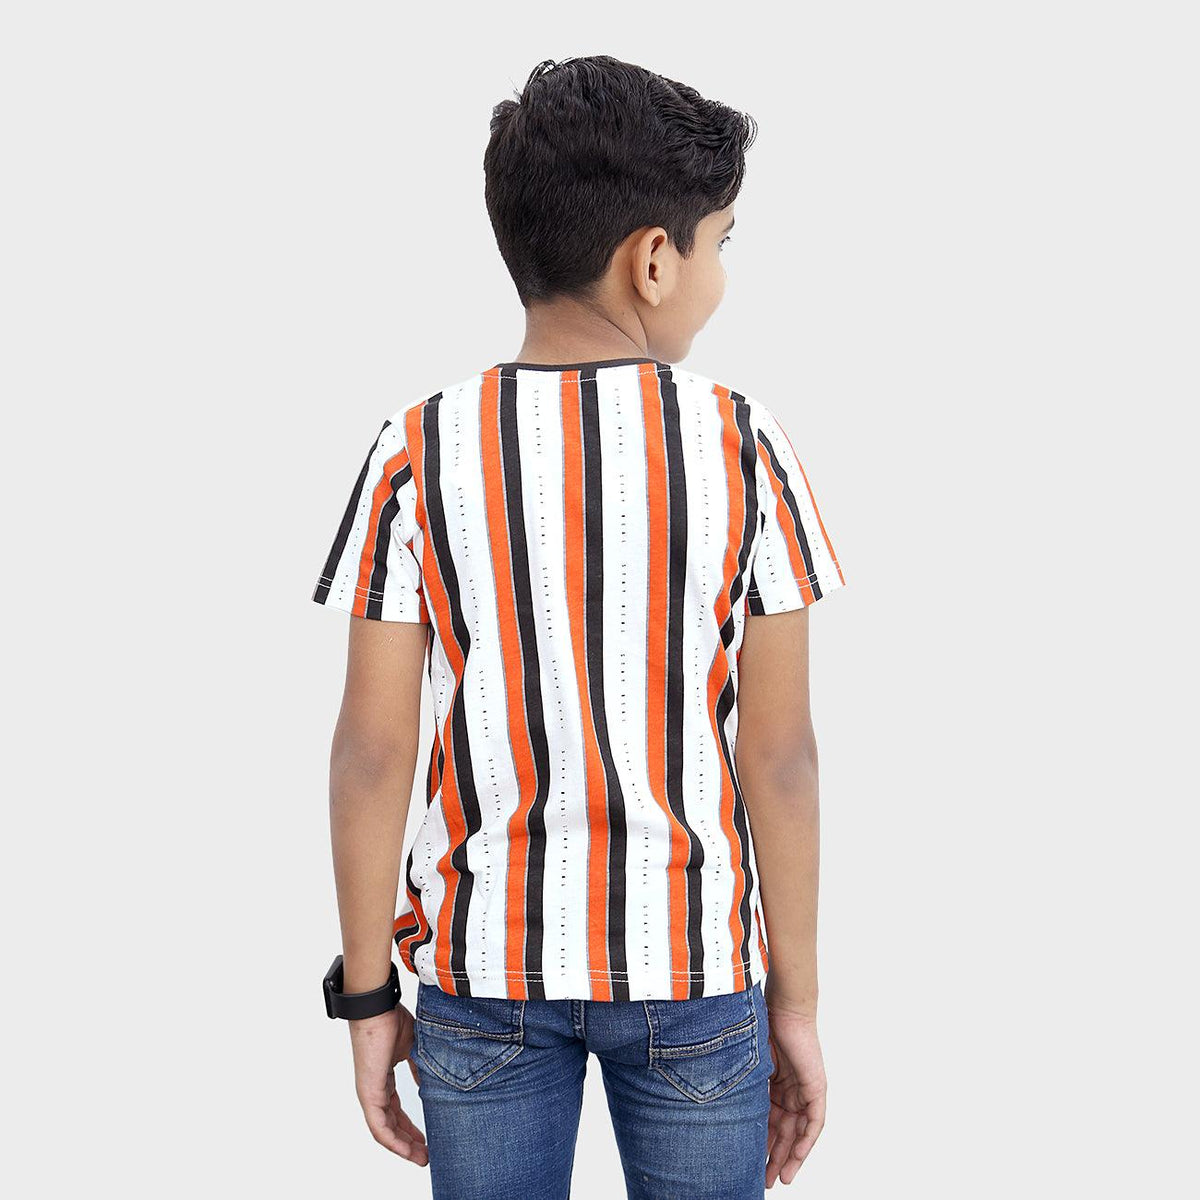 Boys Fashion Vertical Striped Printed Soft Cotton T-Shirt (GE-11782) - Brands River